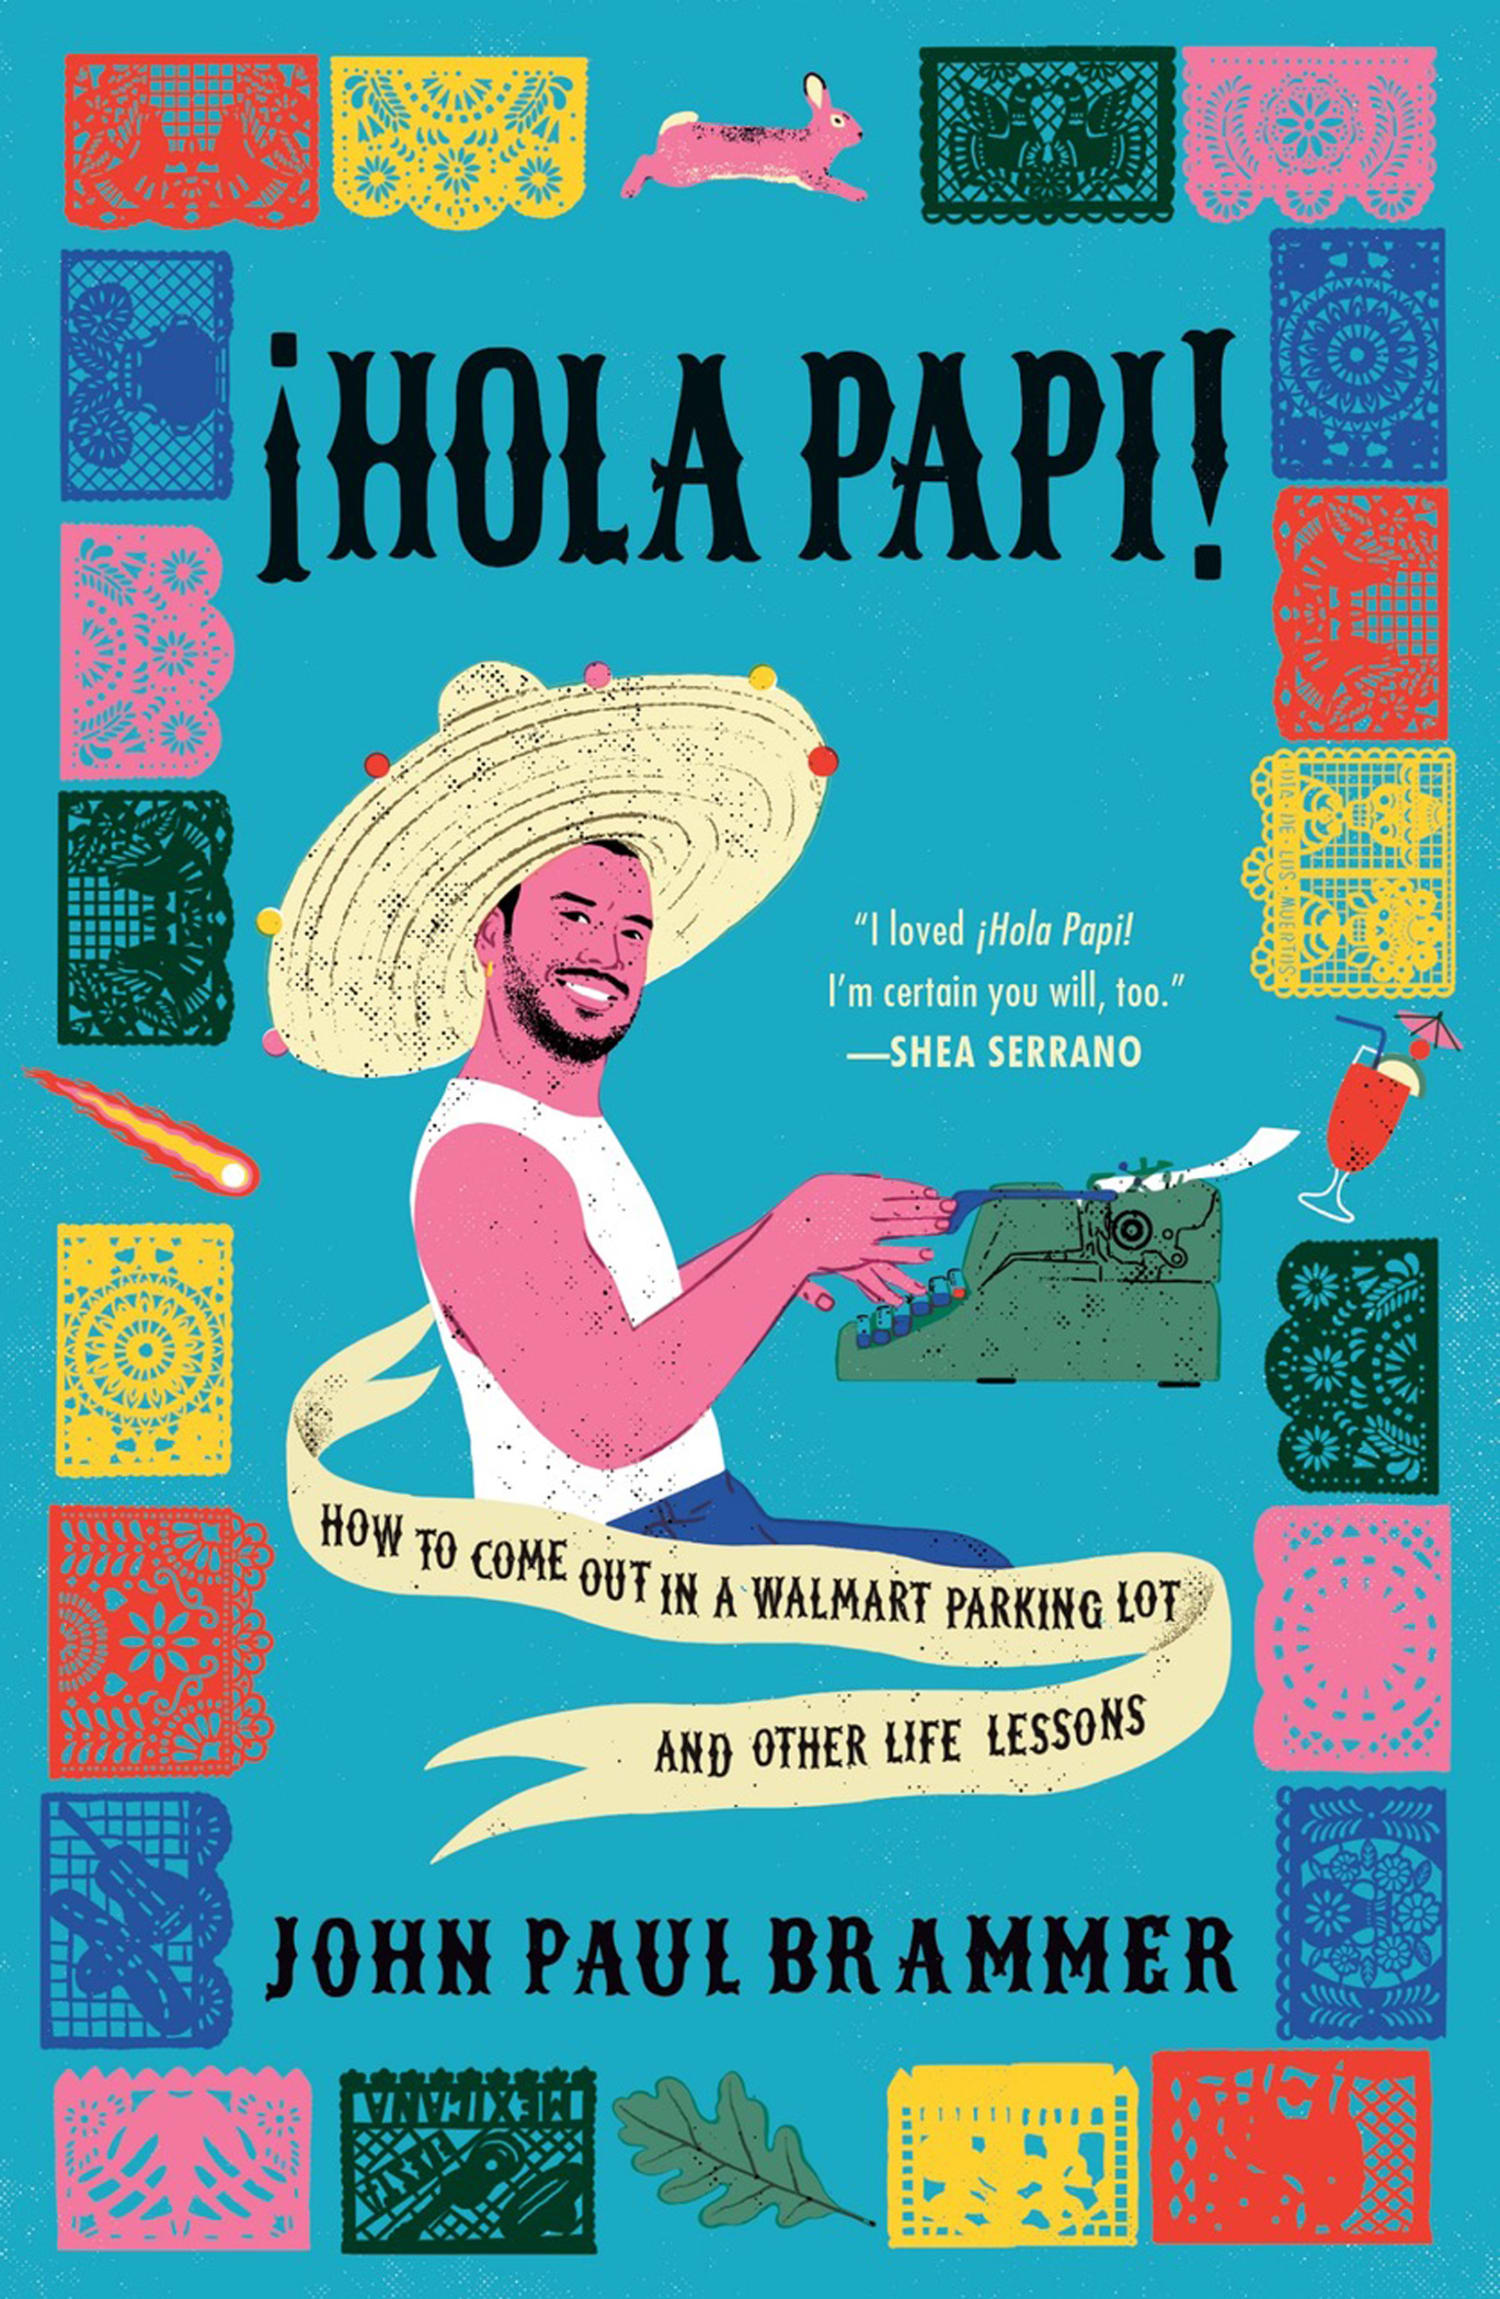 Hola Papi: How a gay, Latino man found his voice as an advice columnist